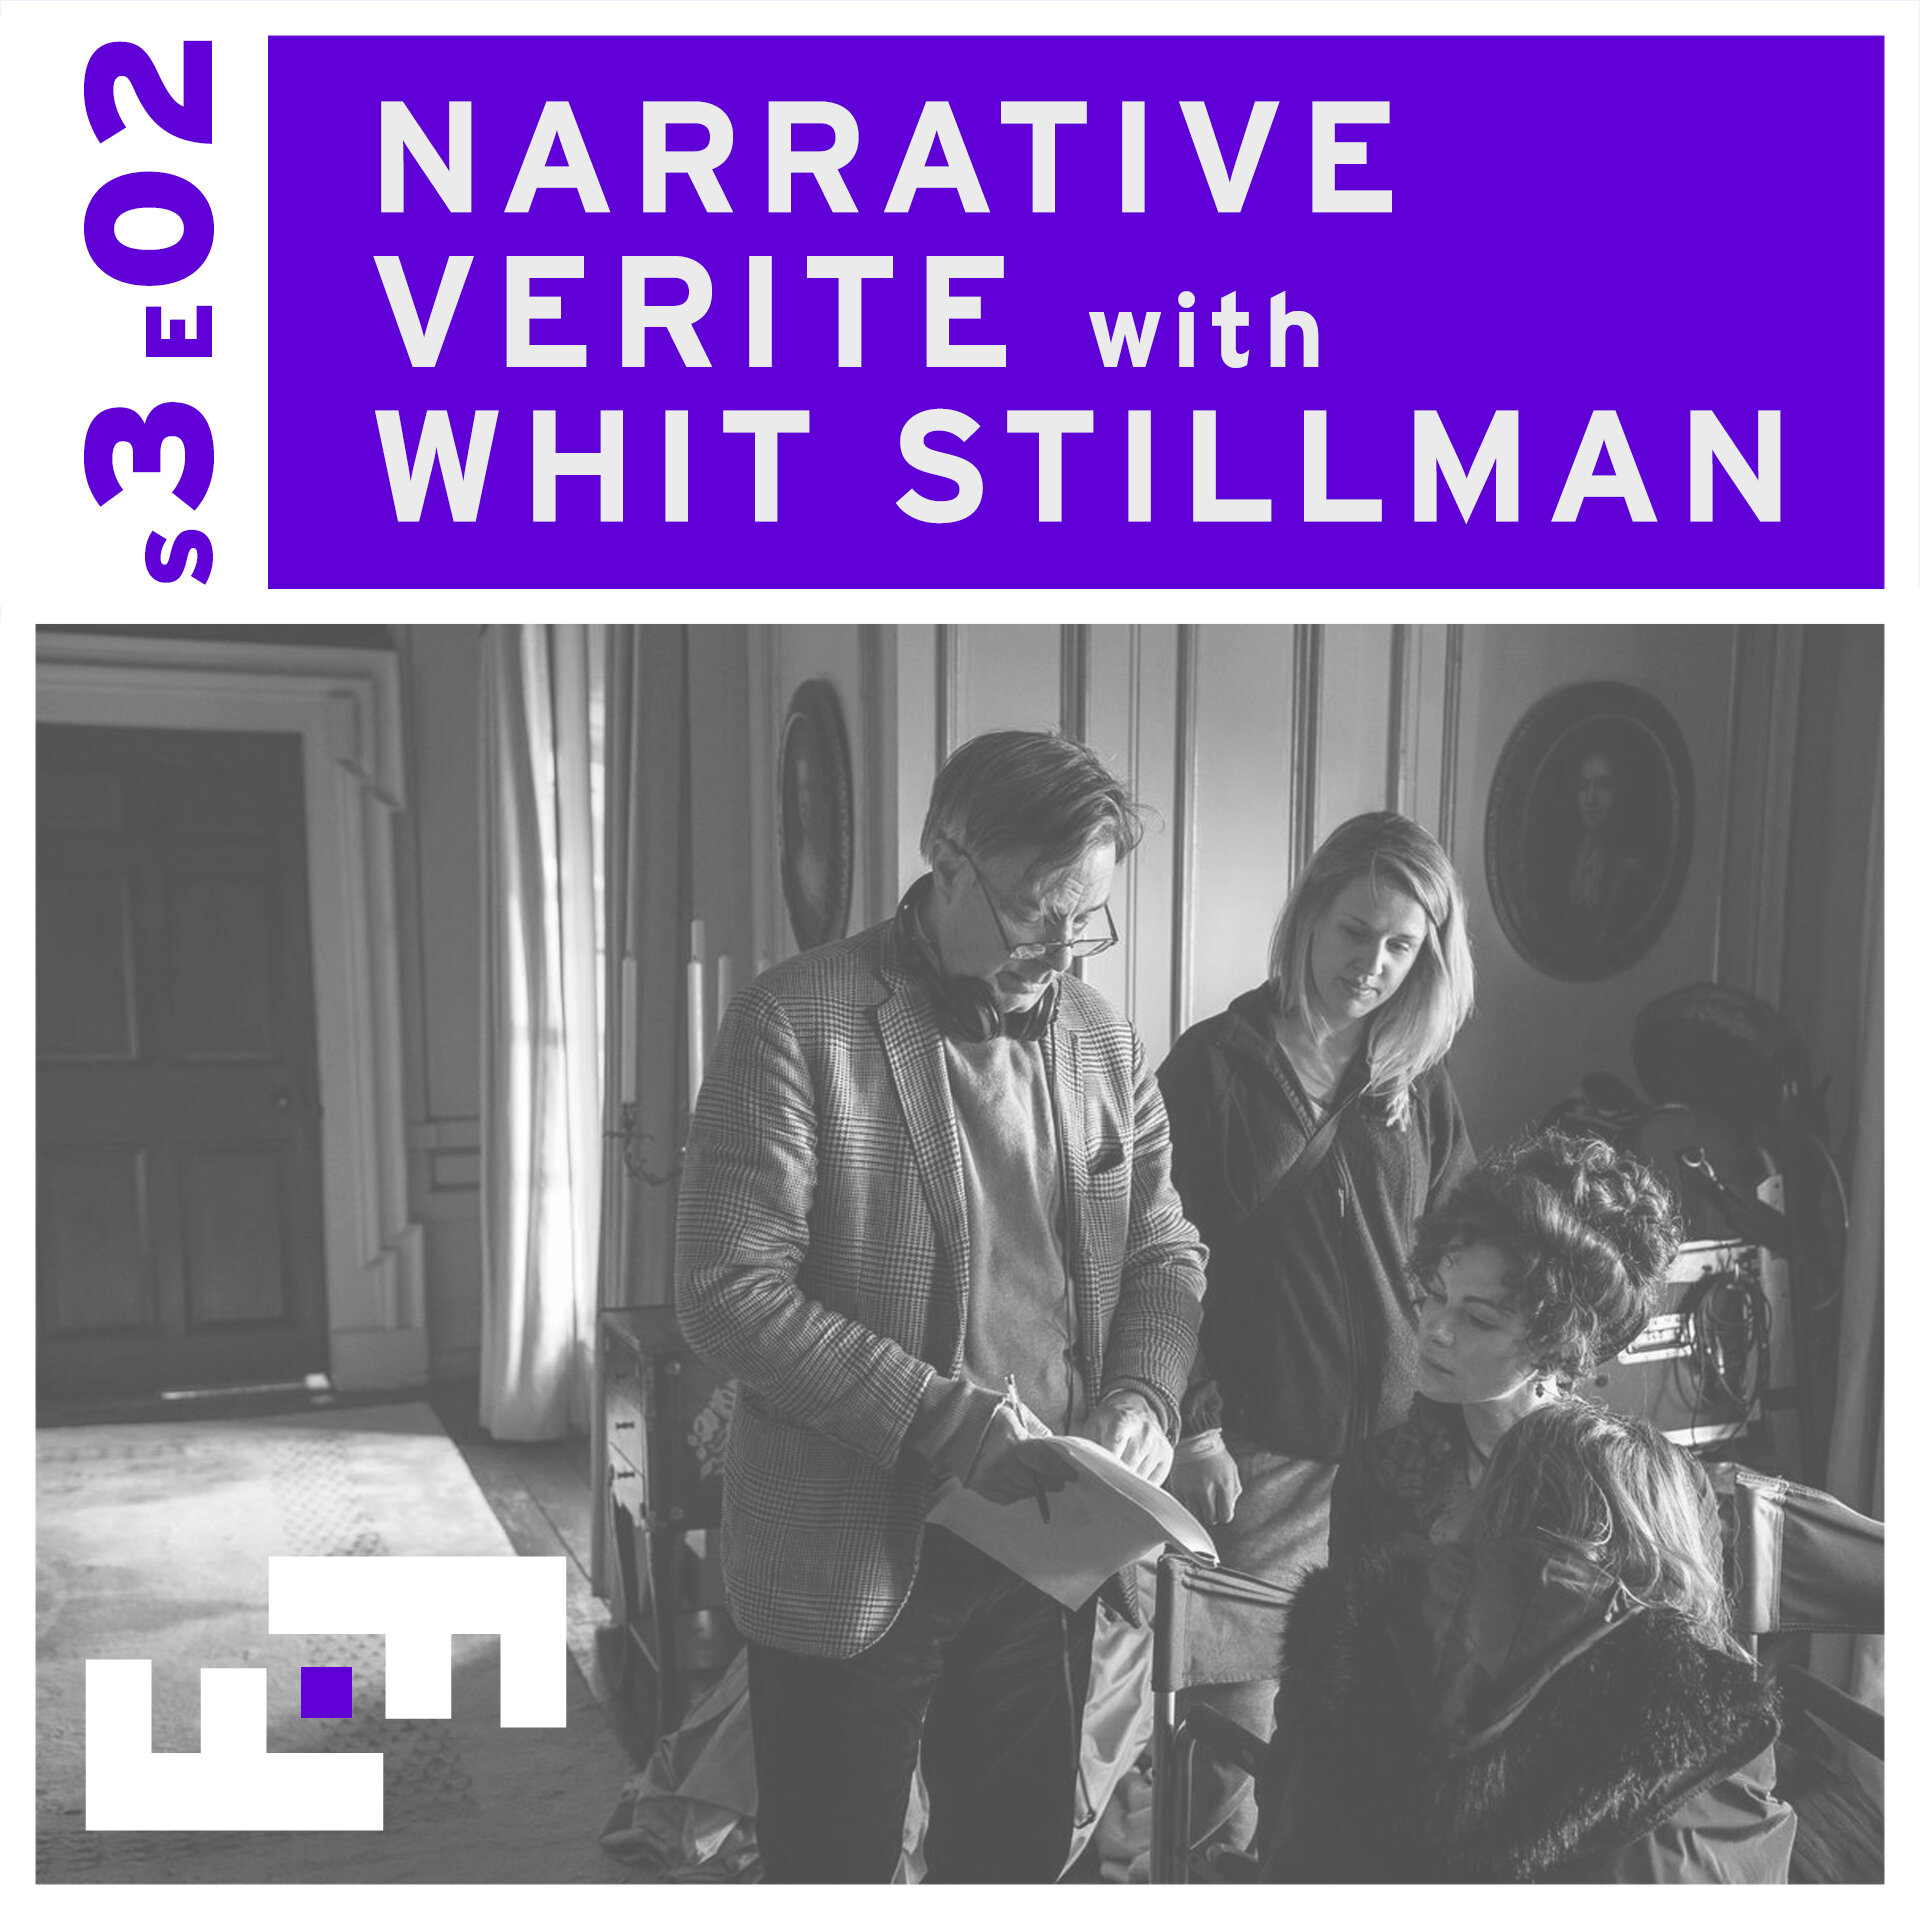 Narrative Verite/Whit Stillman